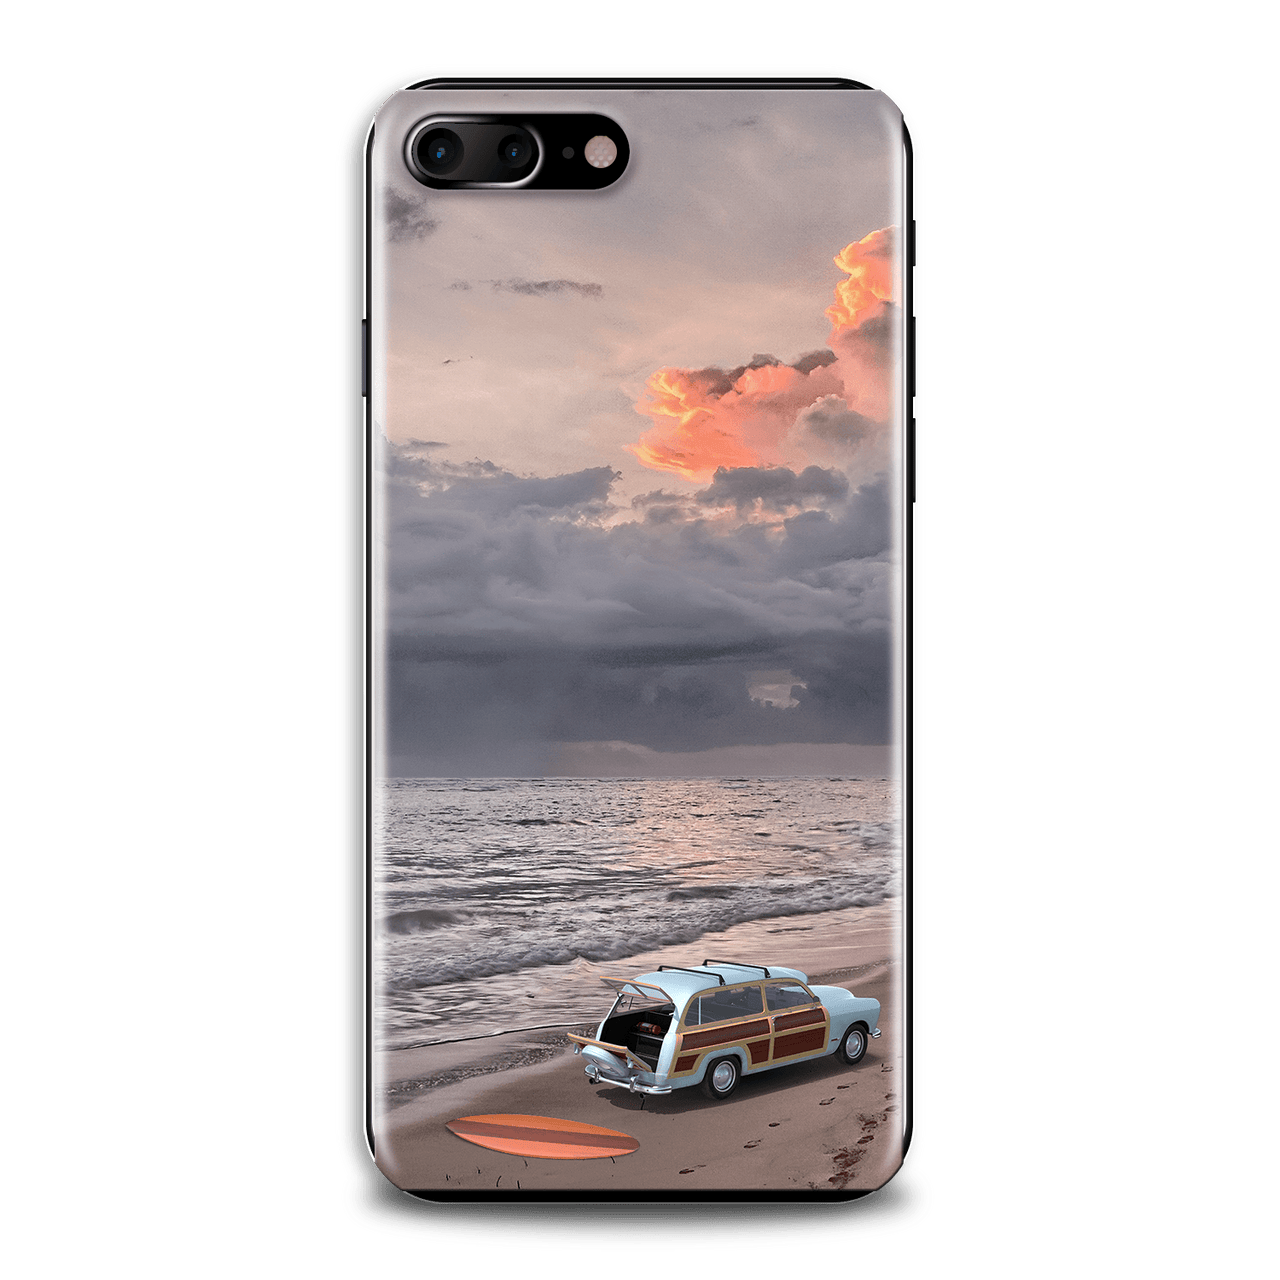 Surfboard Beach Scene Mobile Phone Case Cover